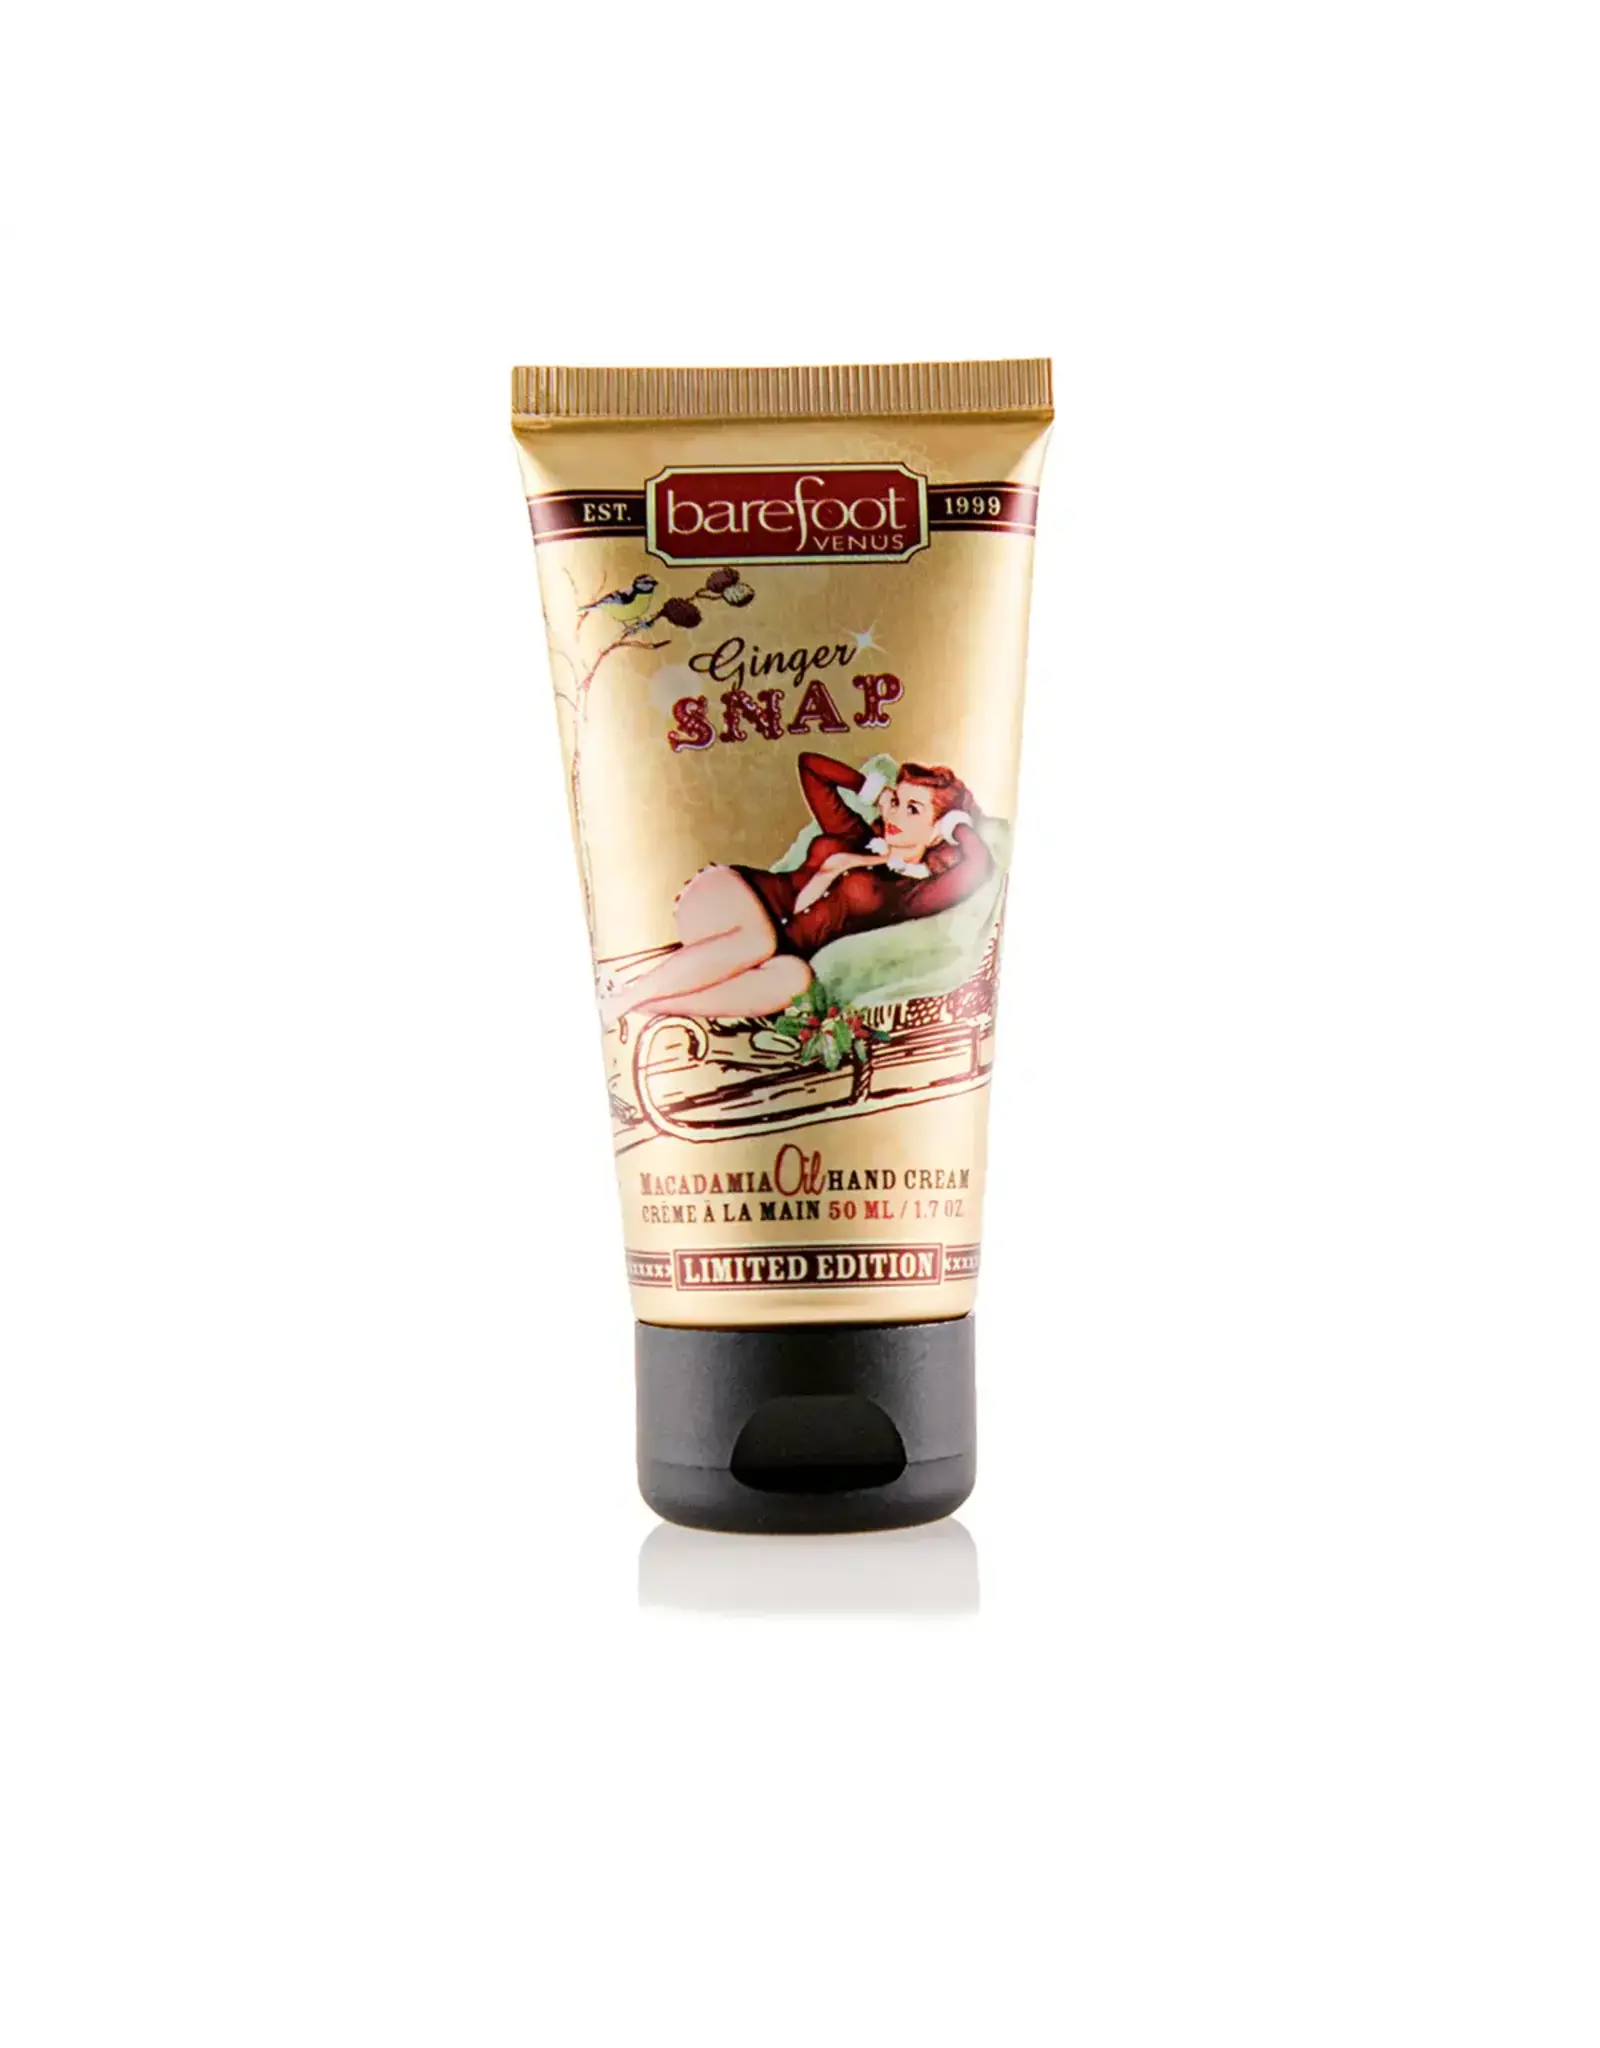 Barefoot Venus Barefoot Venus - Macadamia oil hand cream (multiple scents)